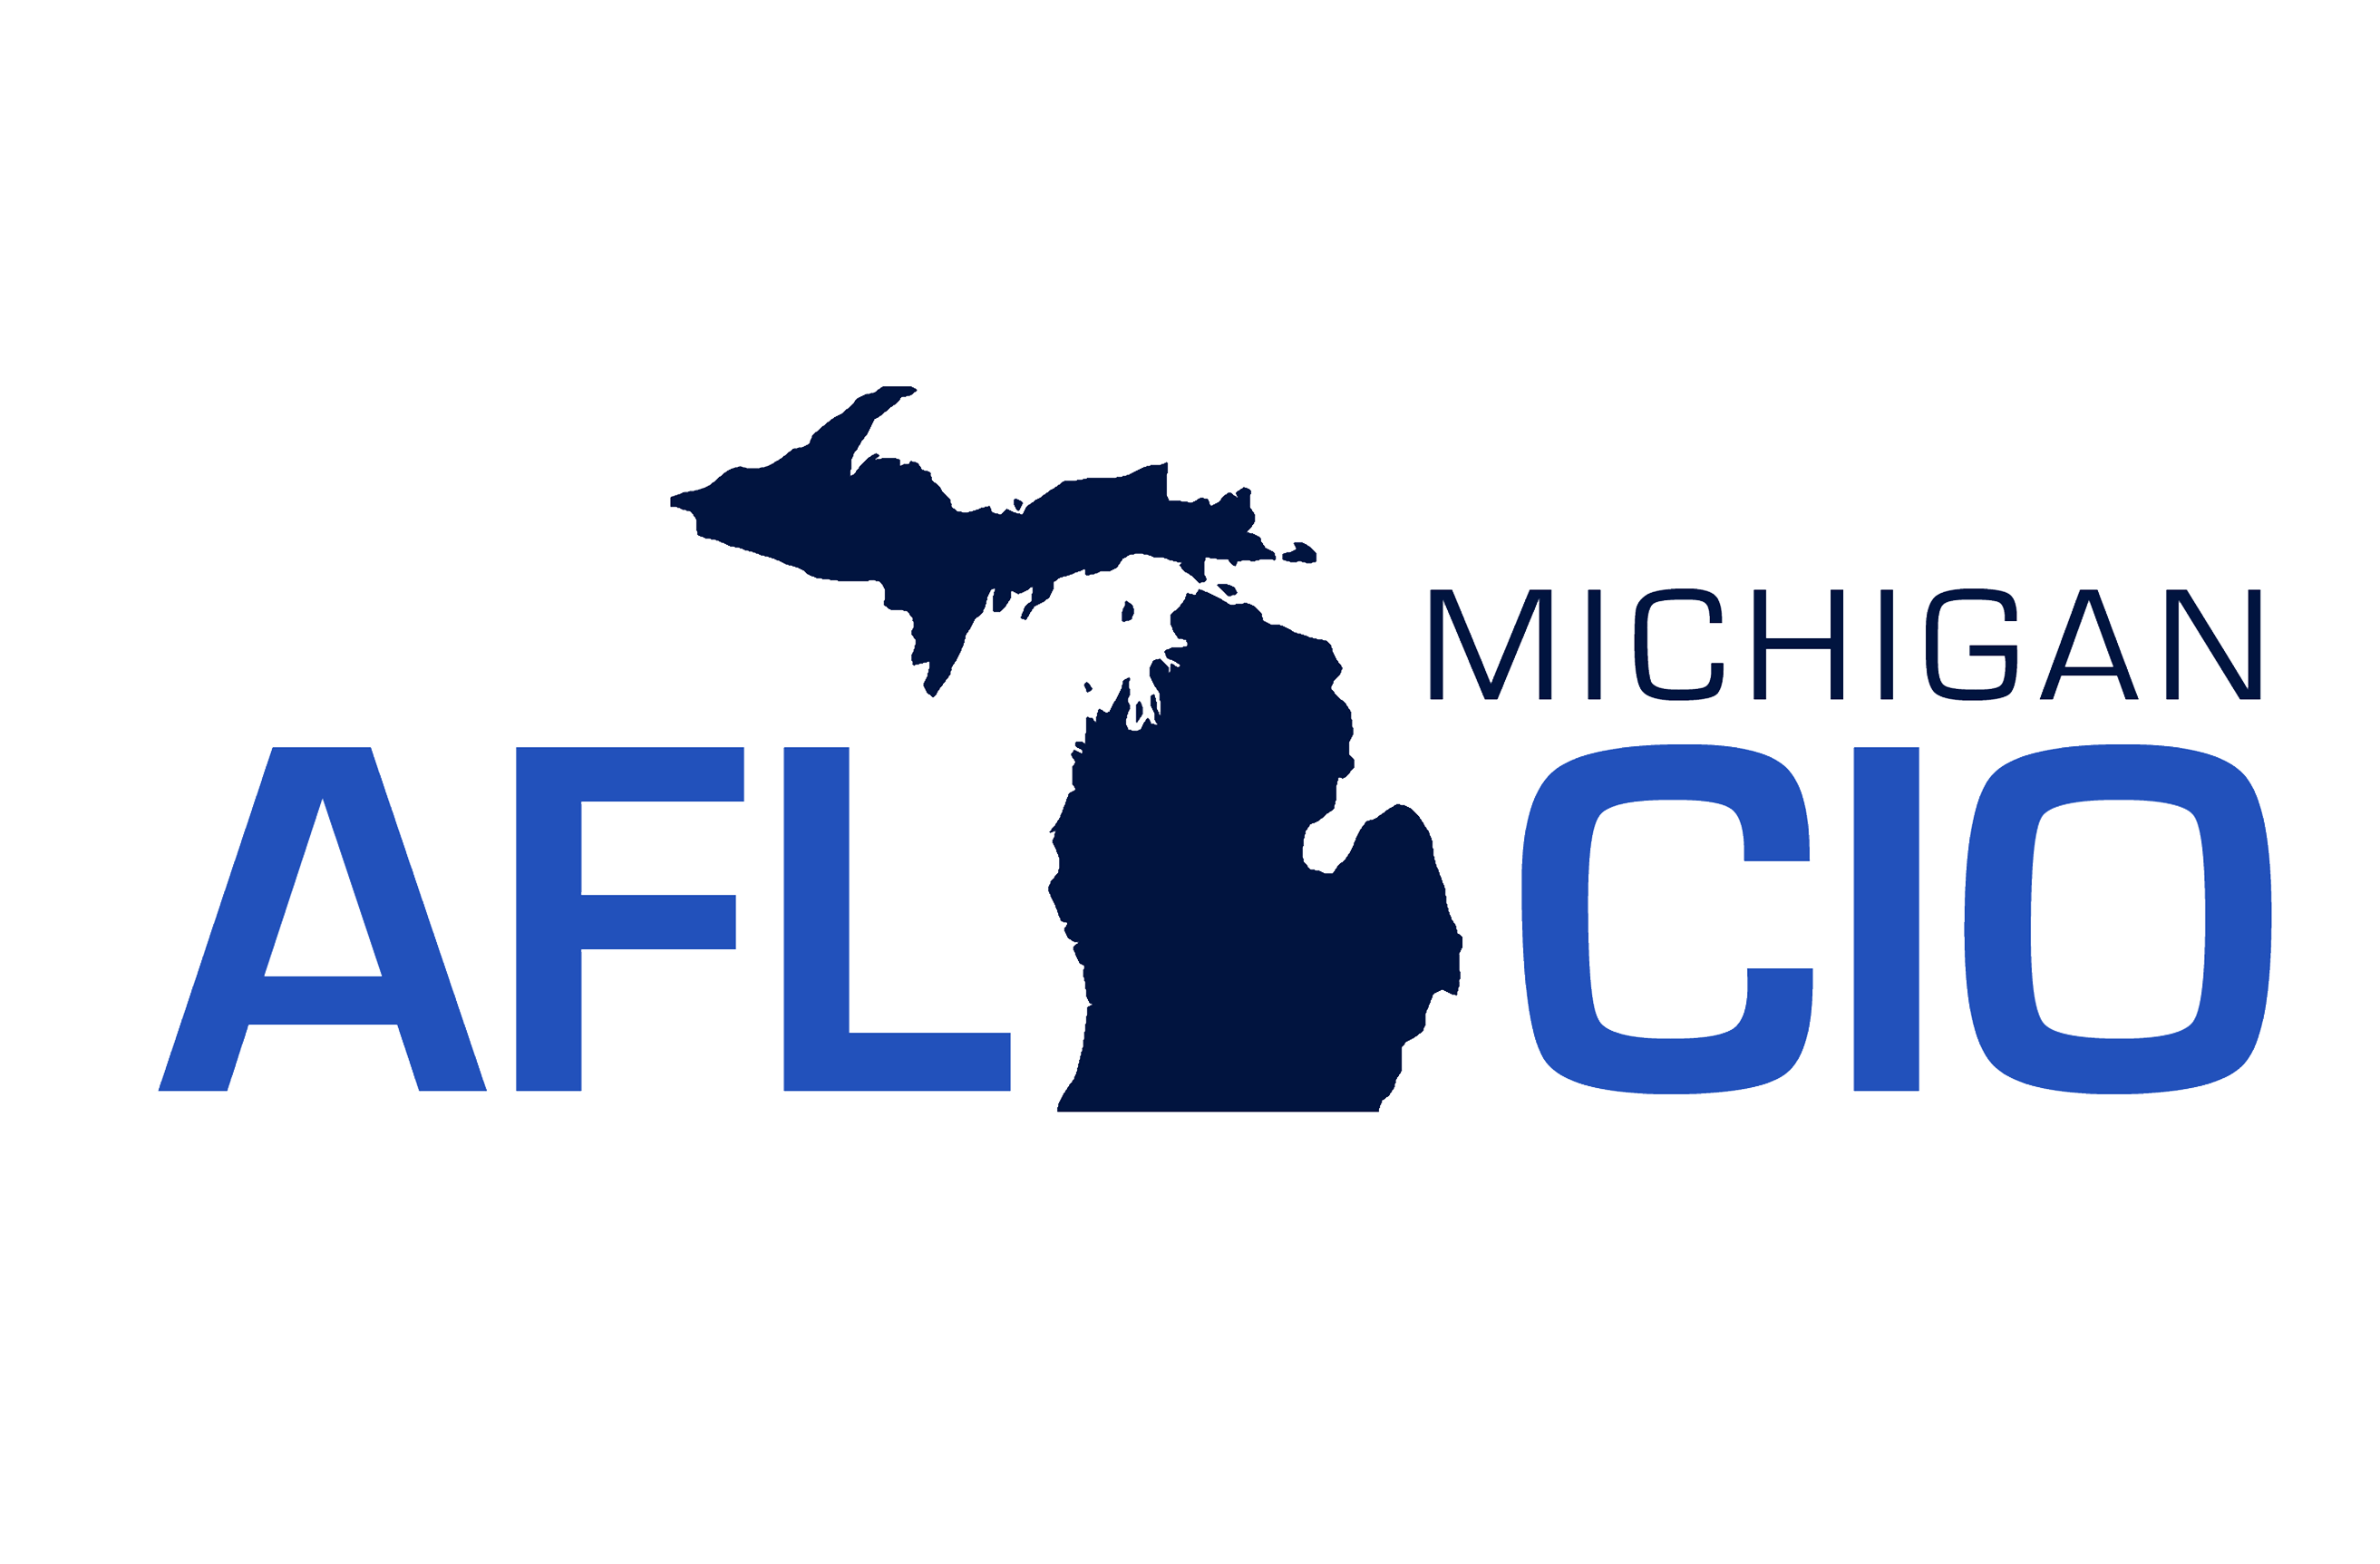 AFL-CIO Logo - Home - Michigan AFL-CIO